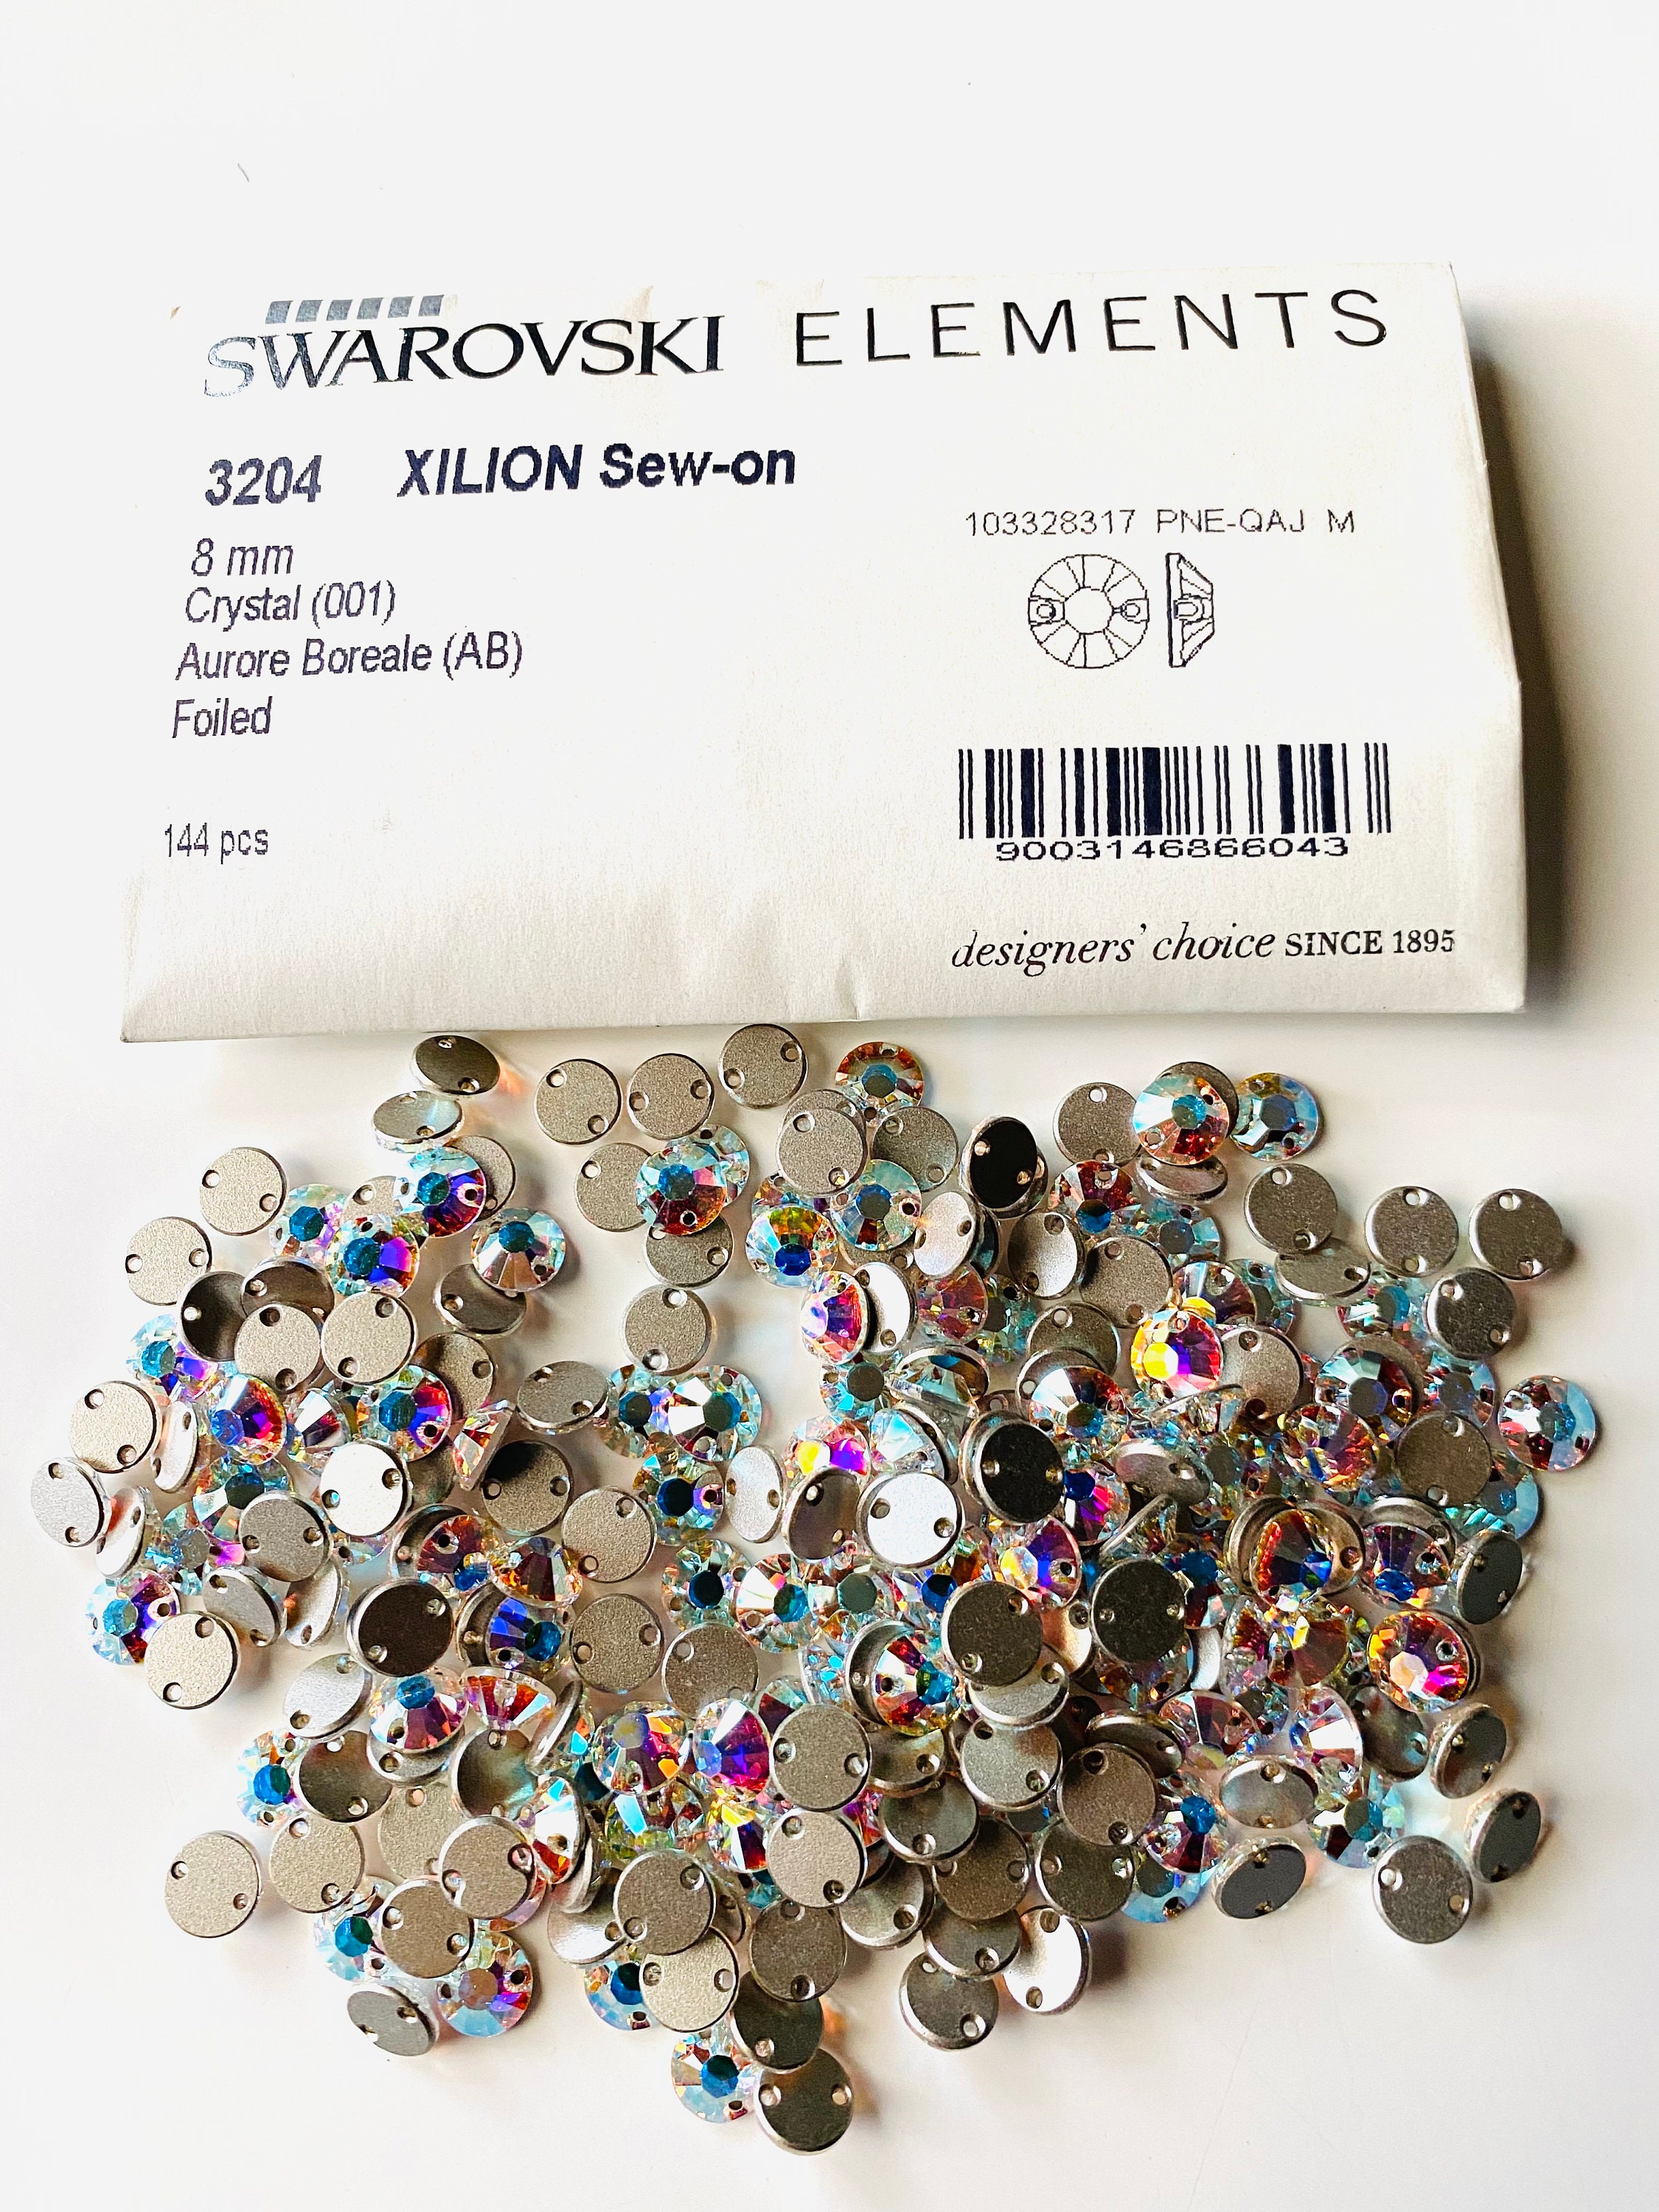 Swarovski Crystal Beads - Cosmic Creations - Wholesale Swarovski Crystal